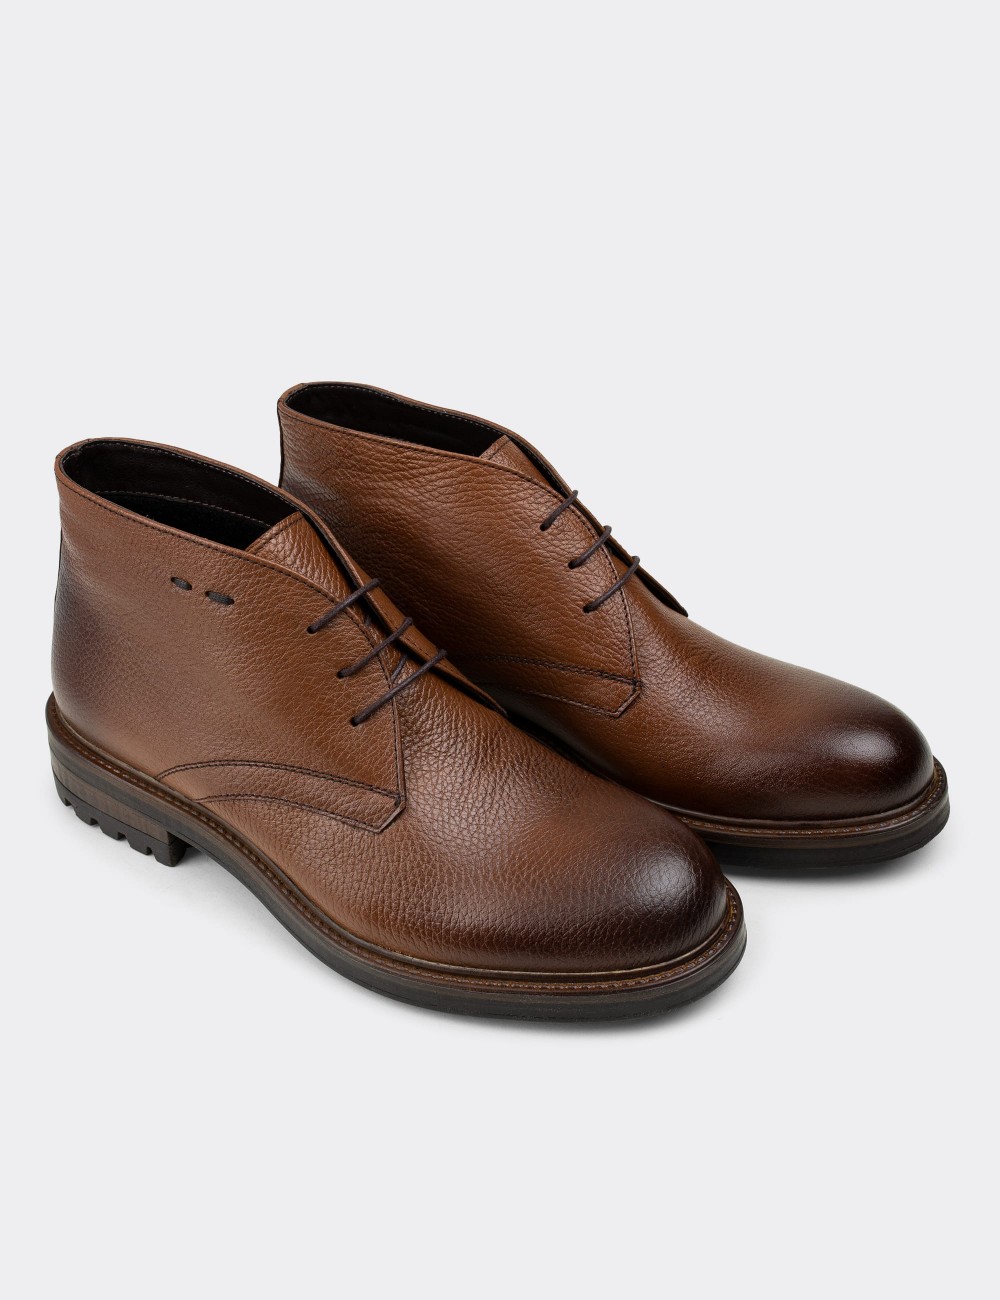 Tan  Leather Boots - 01295MTBAC06